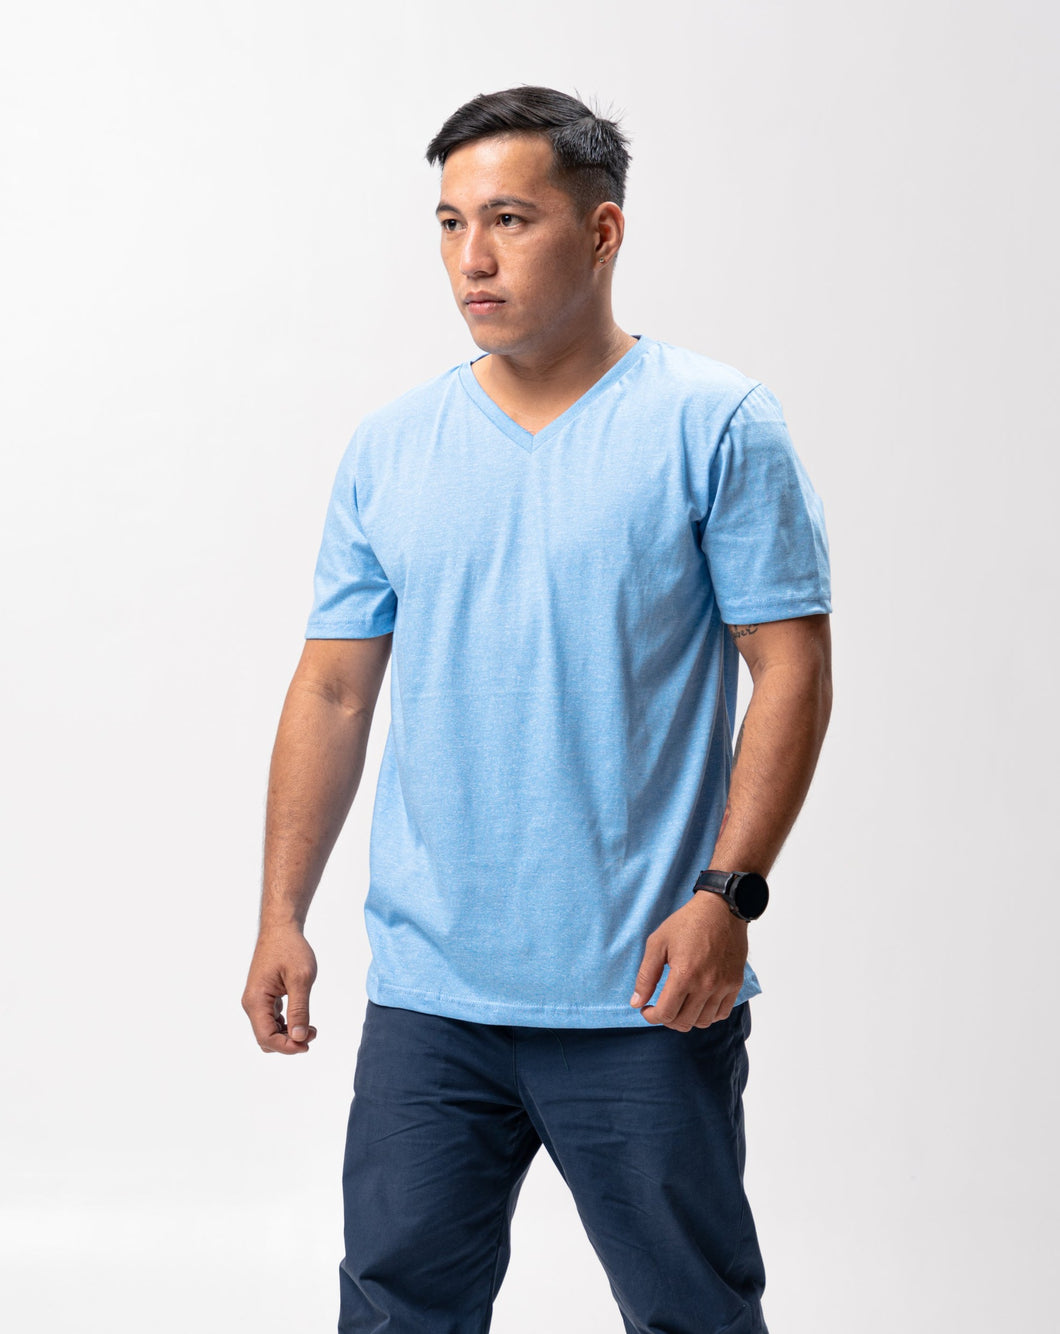 Dela Robia Sirotex Cotton Blue Plain Unisex T-Shirt